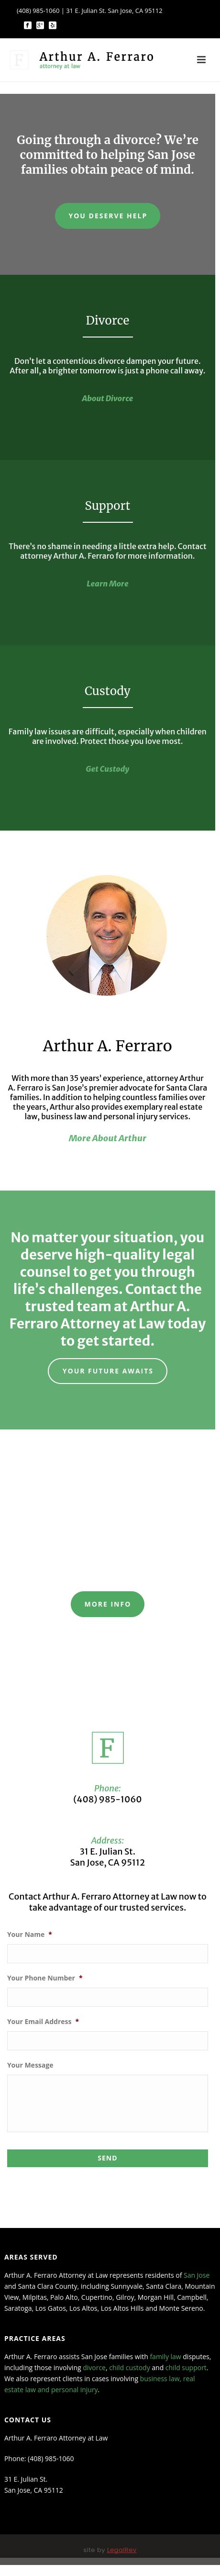 Ferraro Arthur A - San Jose CA Lawyers